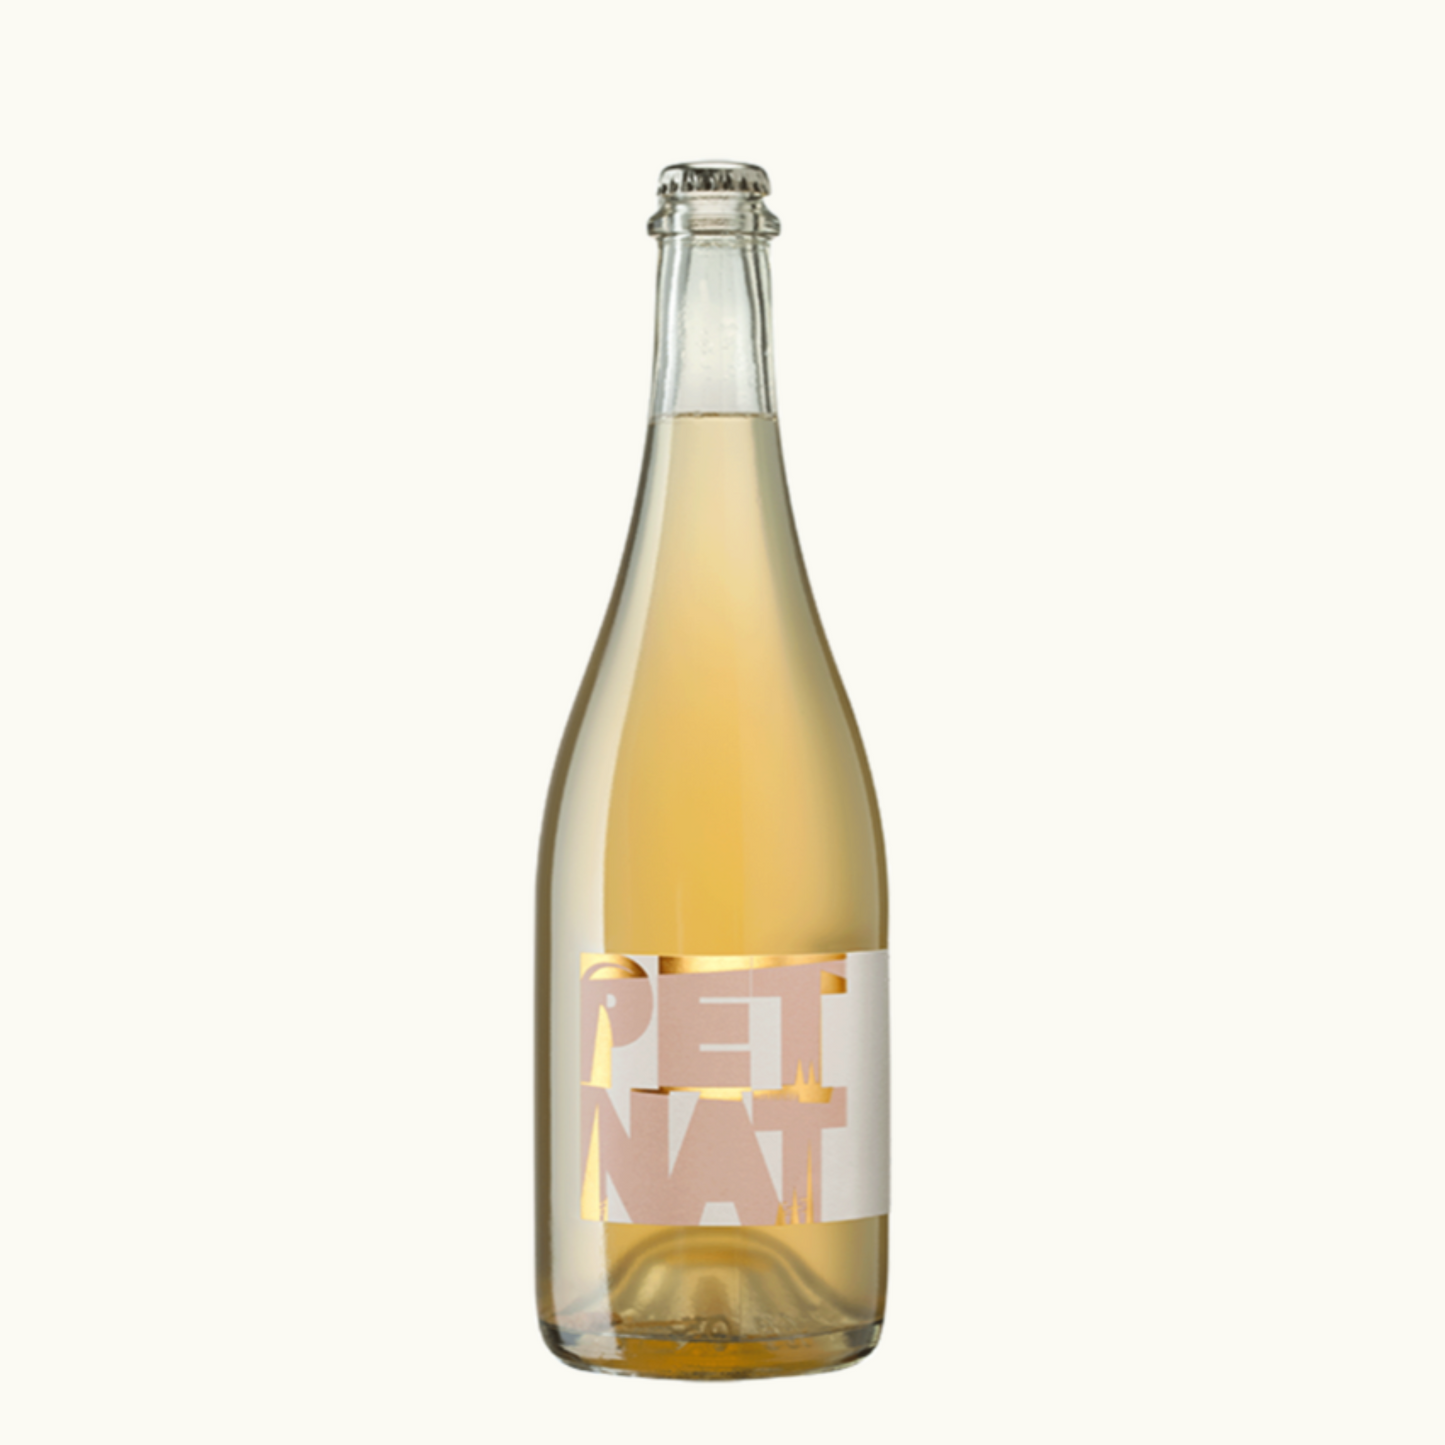 Donkey & Goat Lily's Pet Nat Sparking Chardonnay 2022 (750 ml)